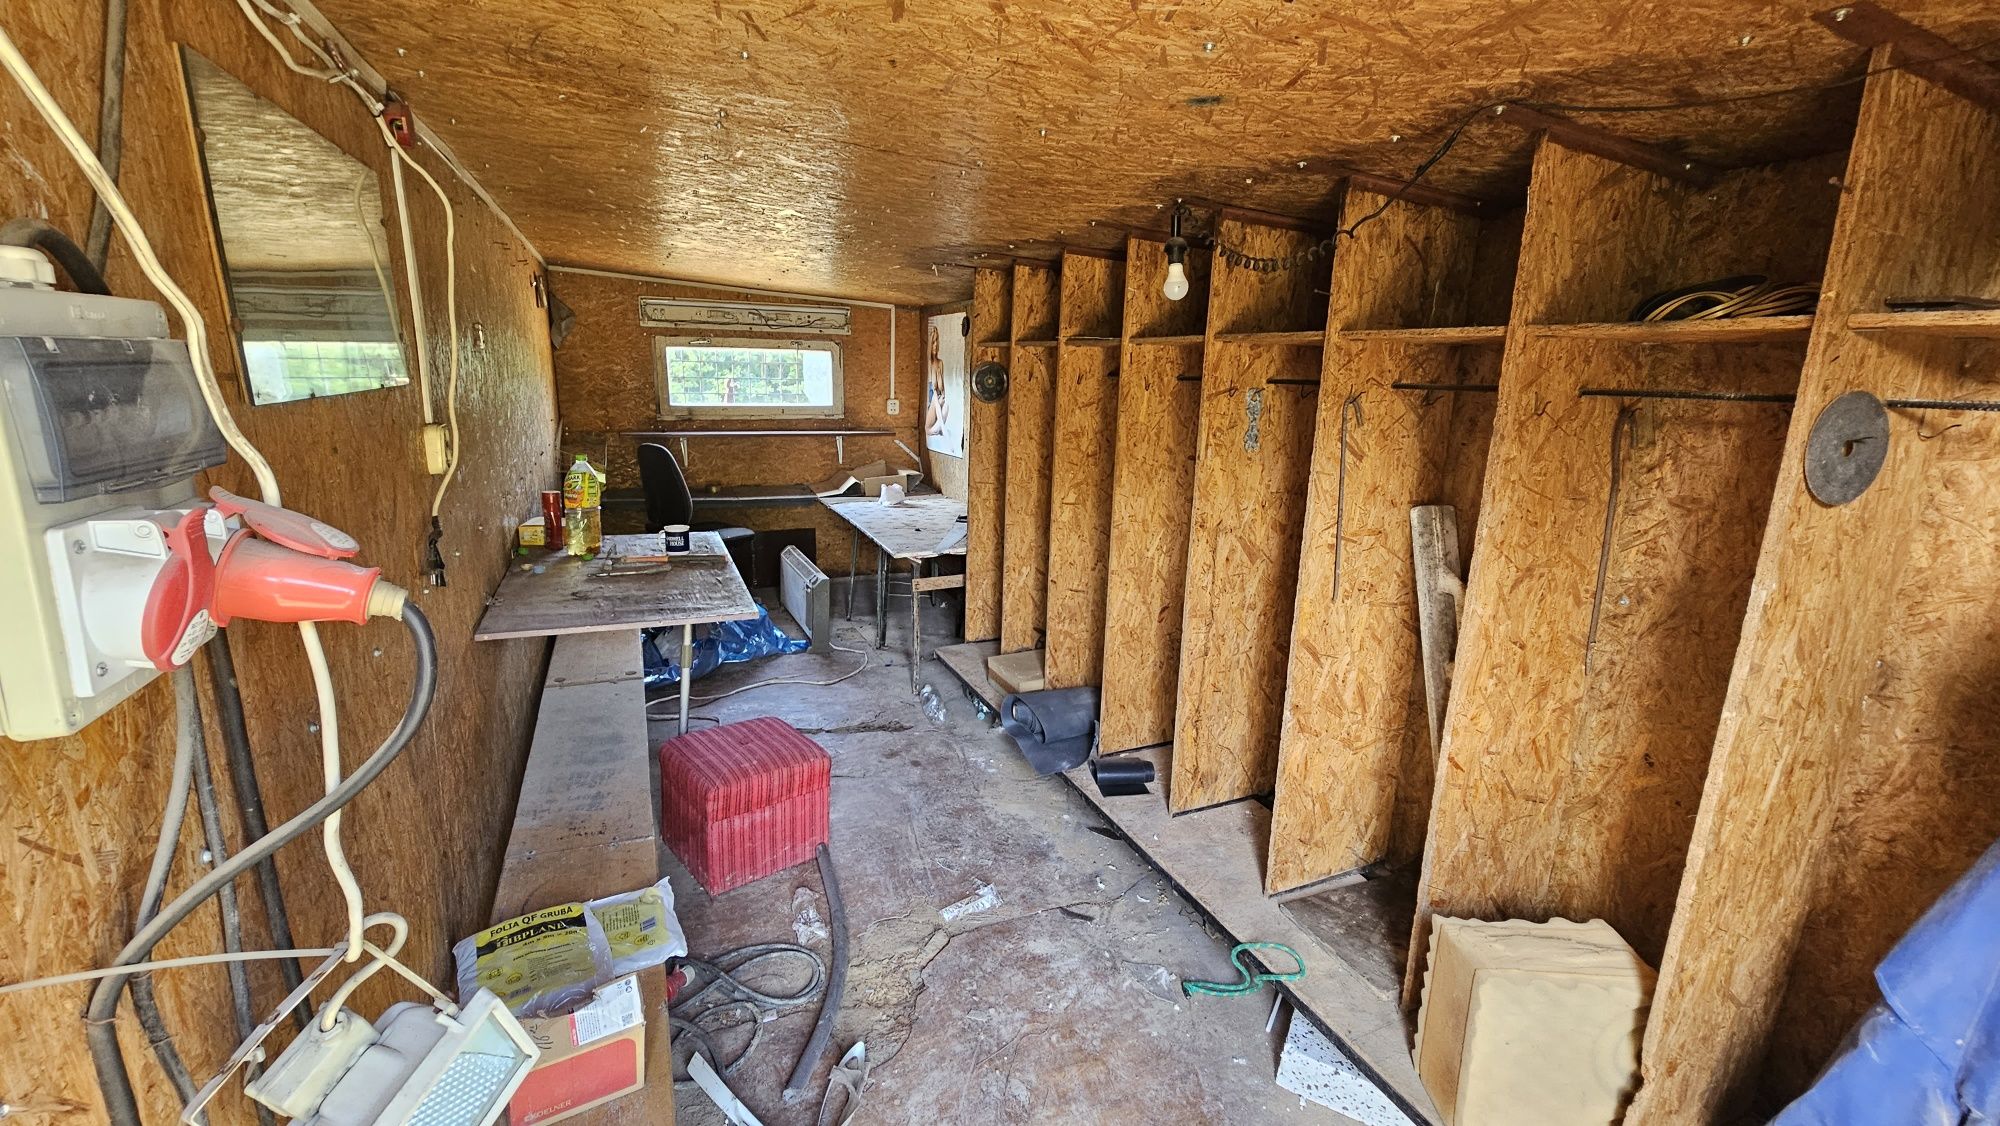 Barakowóz pakamera mobilny magazyn budowlany biuro budowy barak